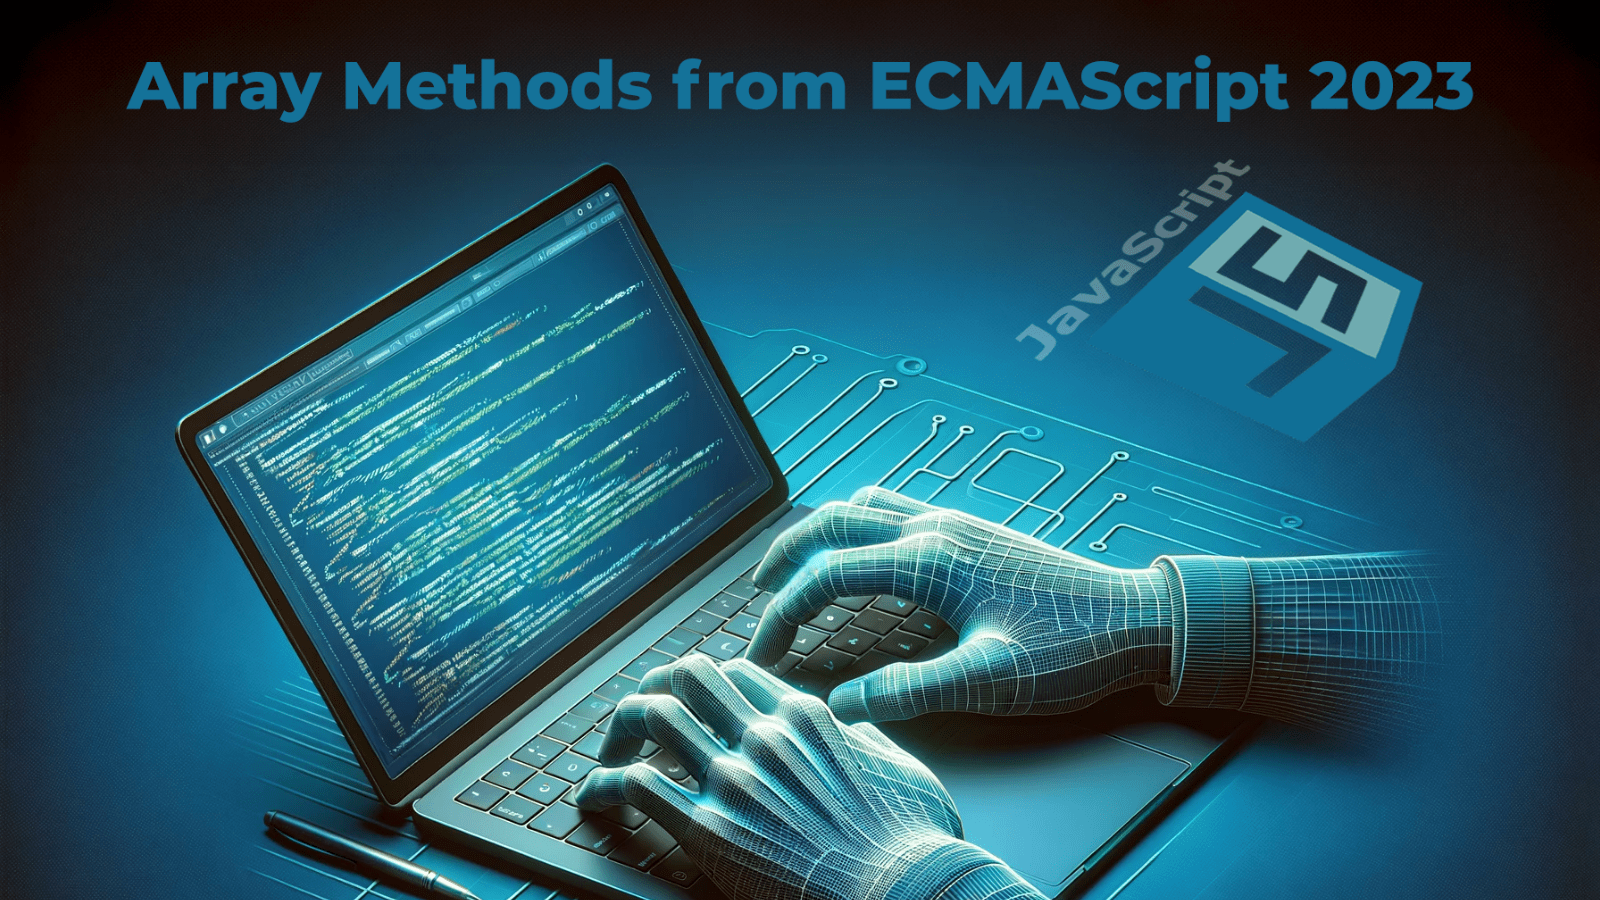 Exploring the new Array Methods from ECMAScript 2023